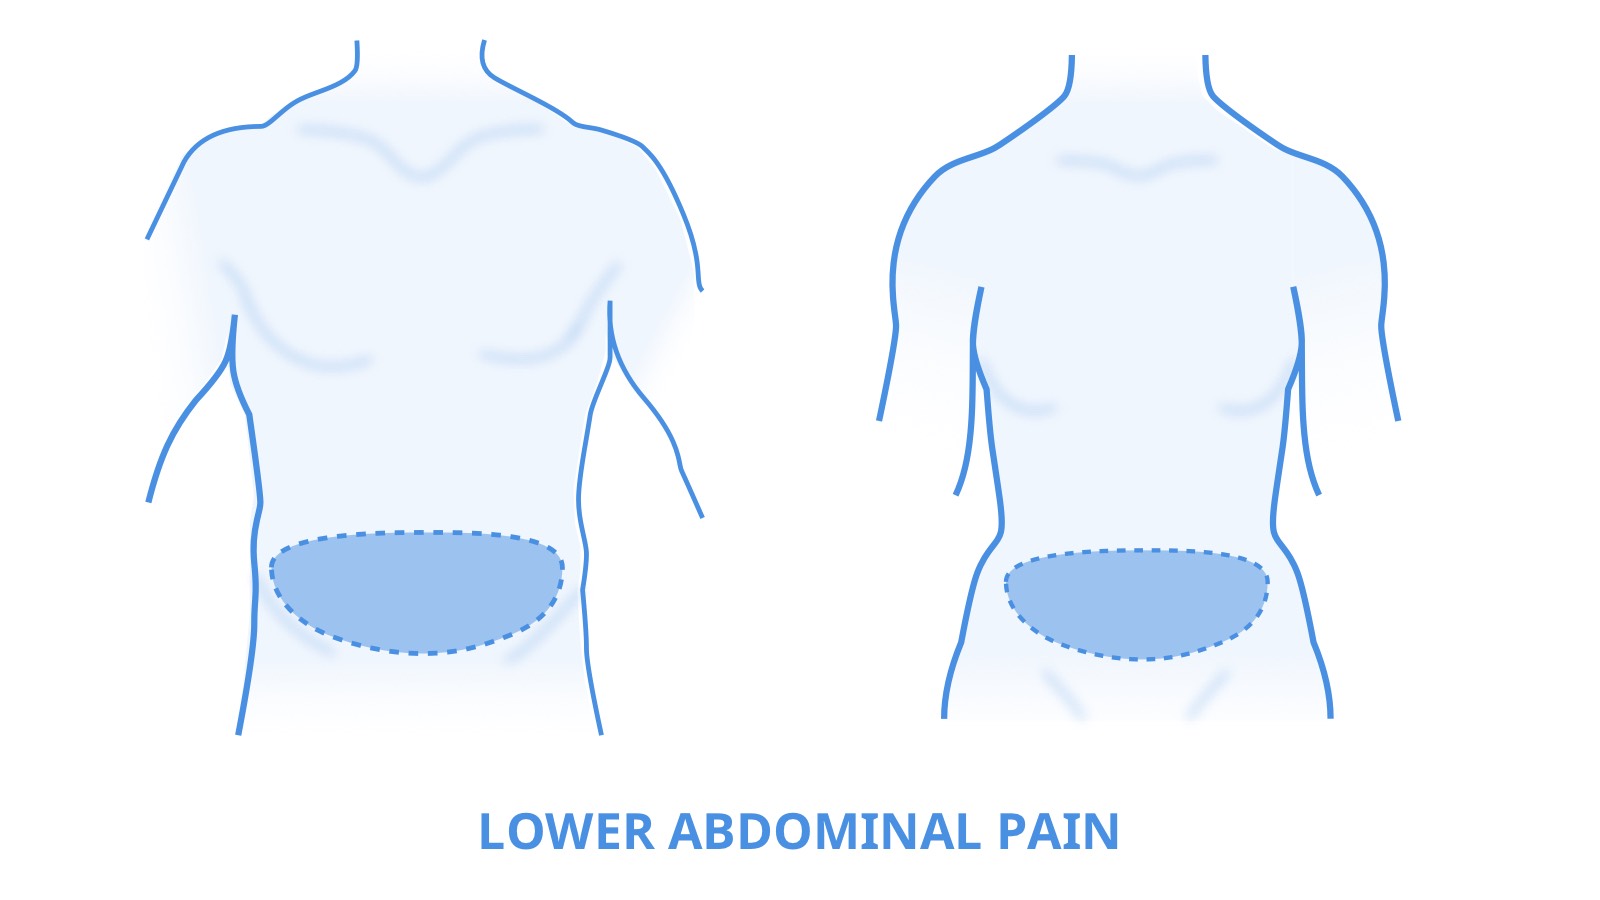 Image highlighting the lower abdomen